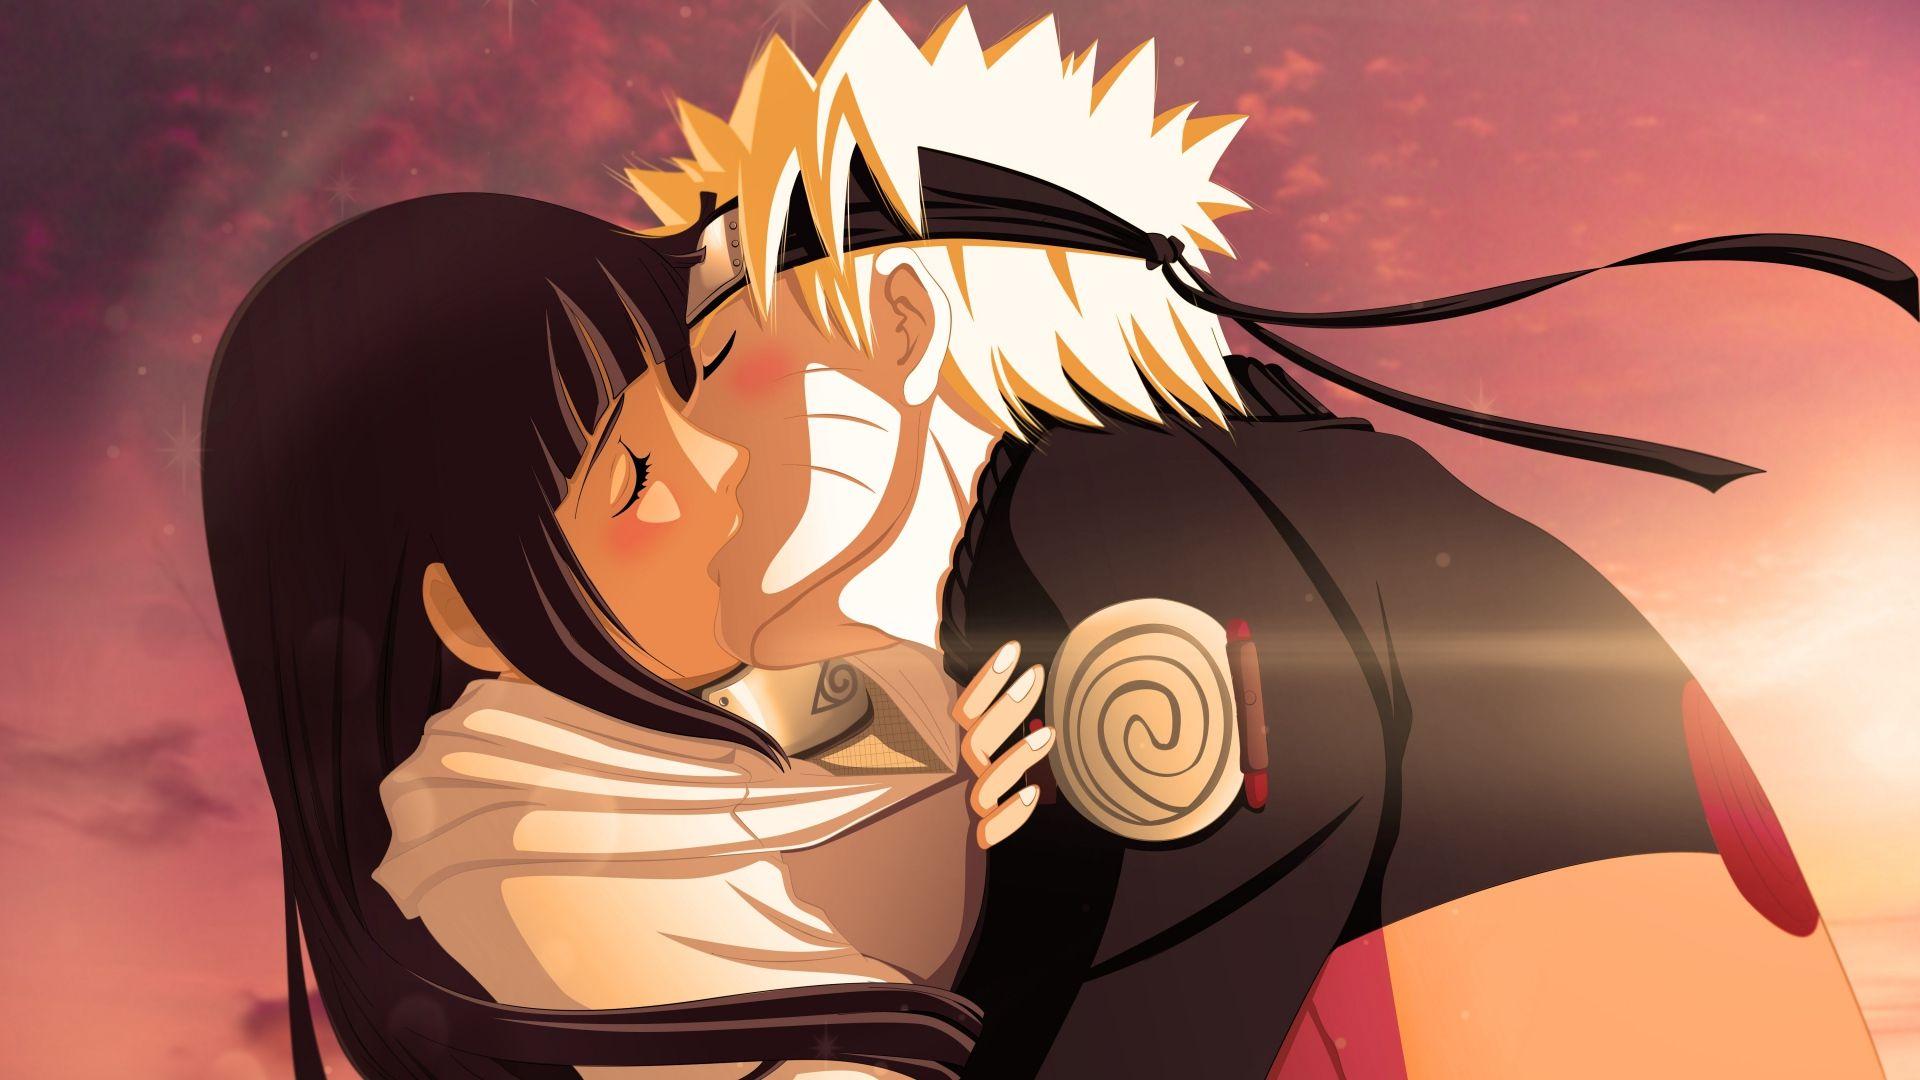 Naruto Shippuden Background. Wallpaper, Background, Image